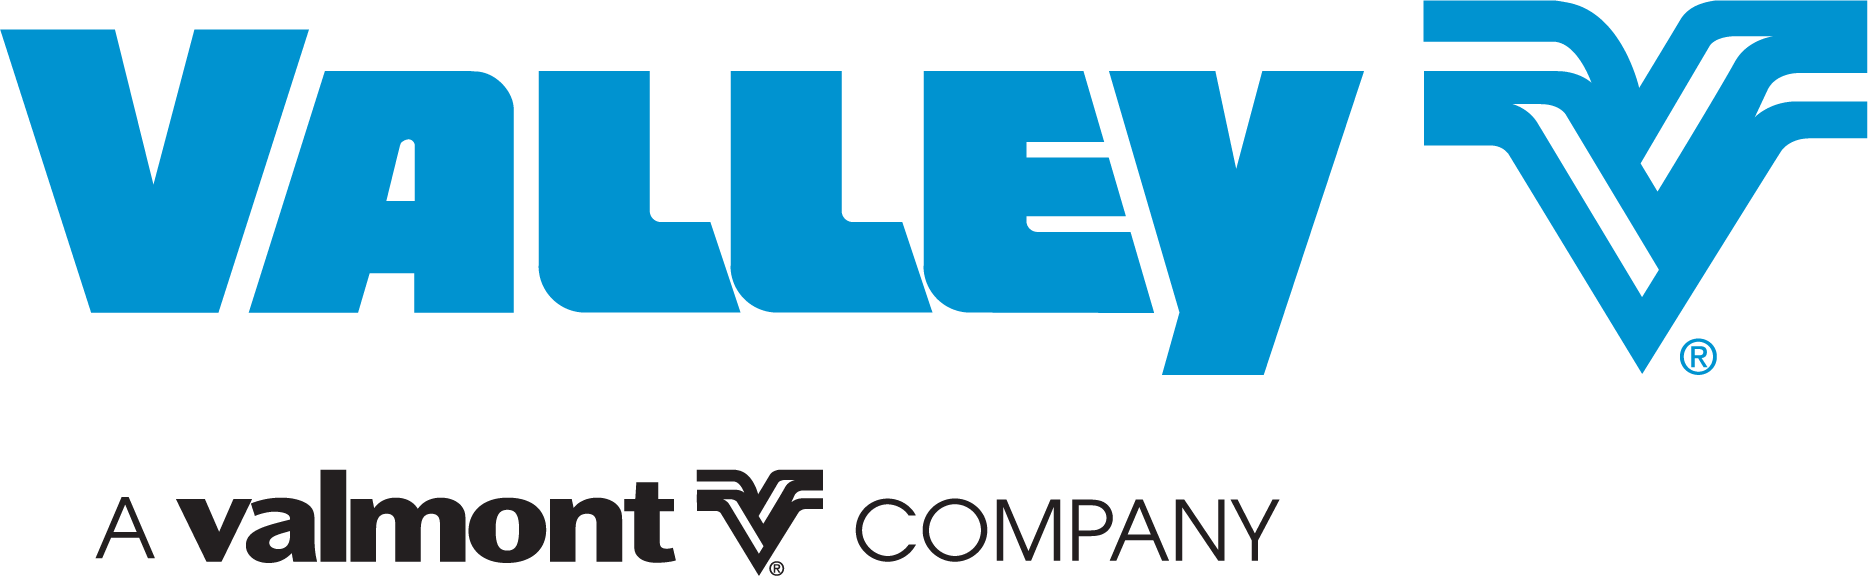 Valley_A Valmont Company_Horizontal_logo